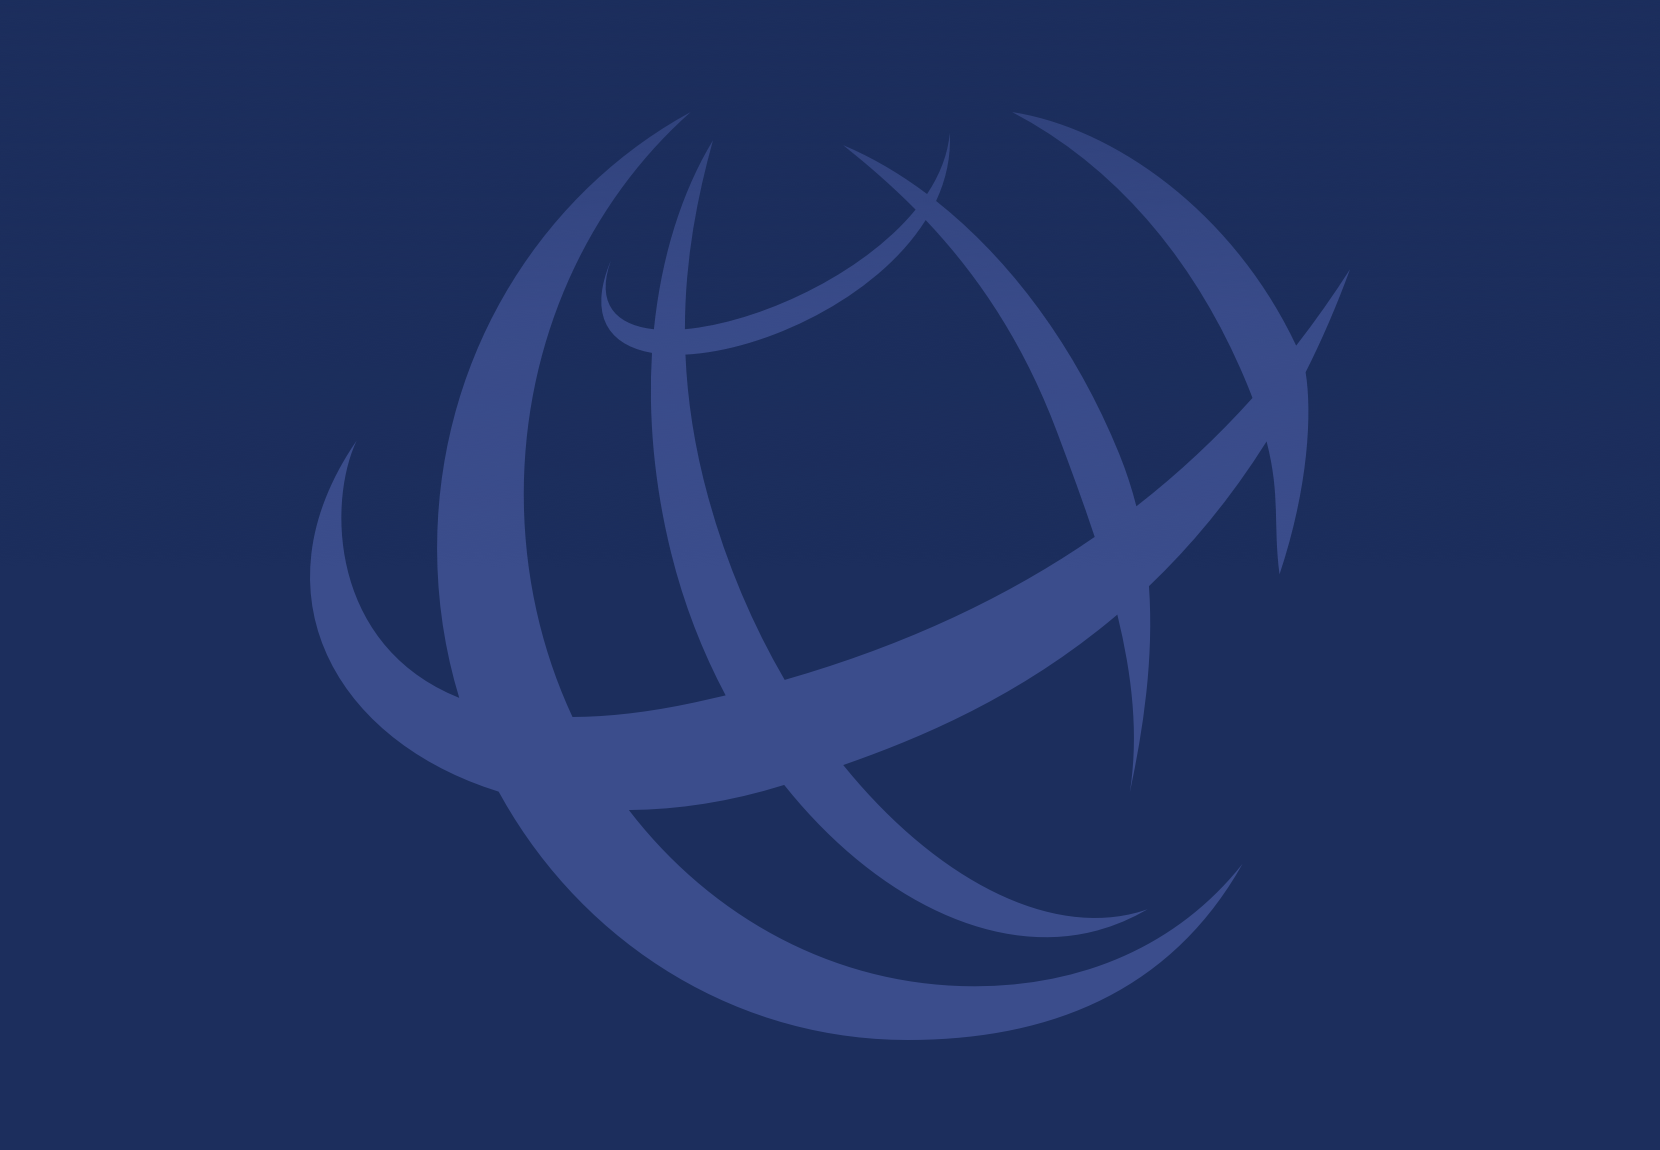 Visuel symbolique du logo SIPLEC